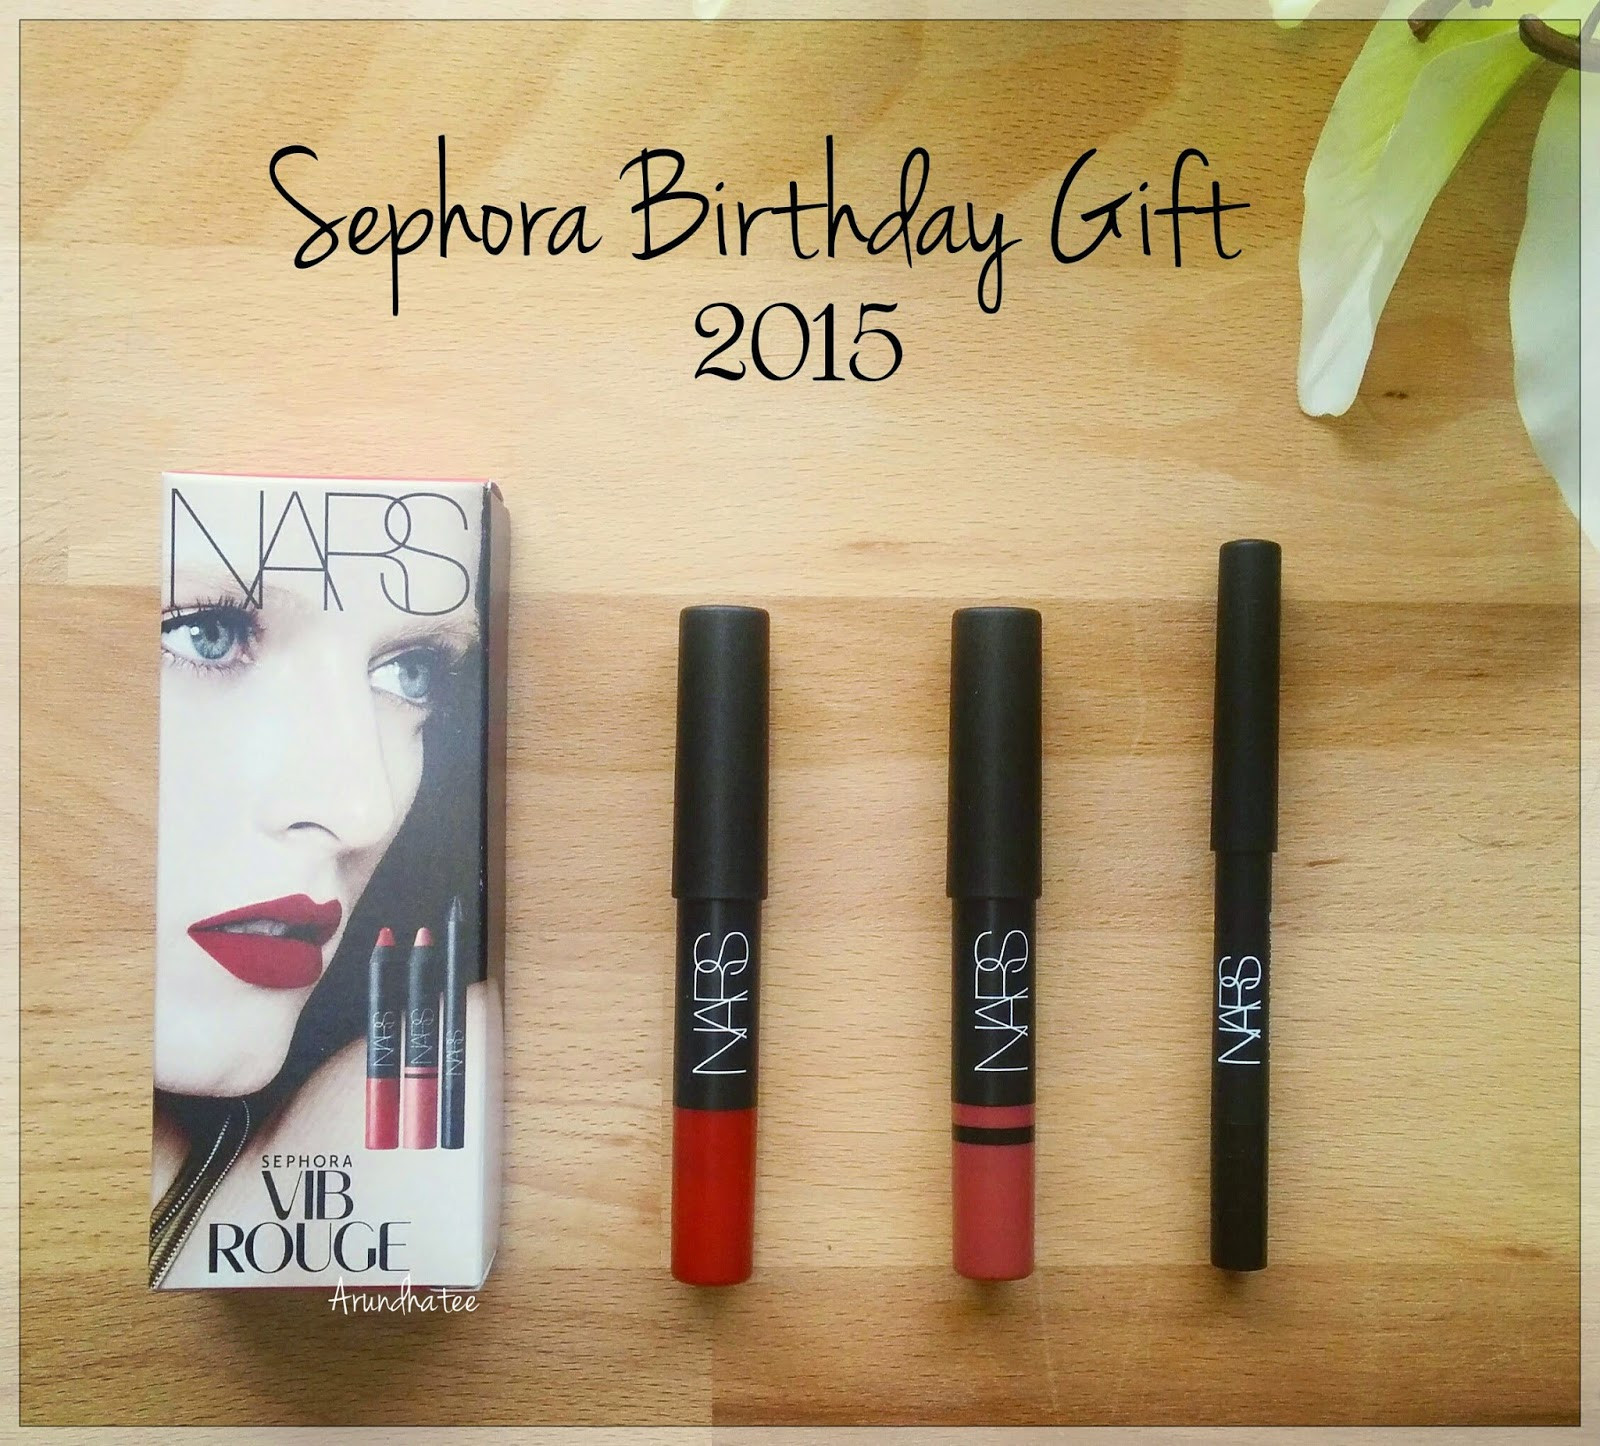 Sephora Free Birthday Gift
 Discovering me Sephora wishes "Happy Birthday"